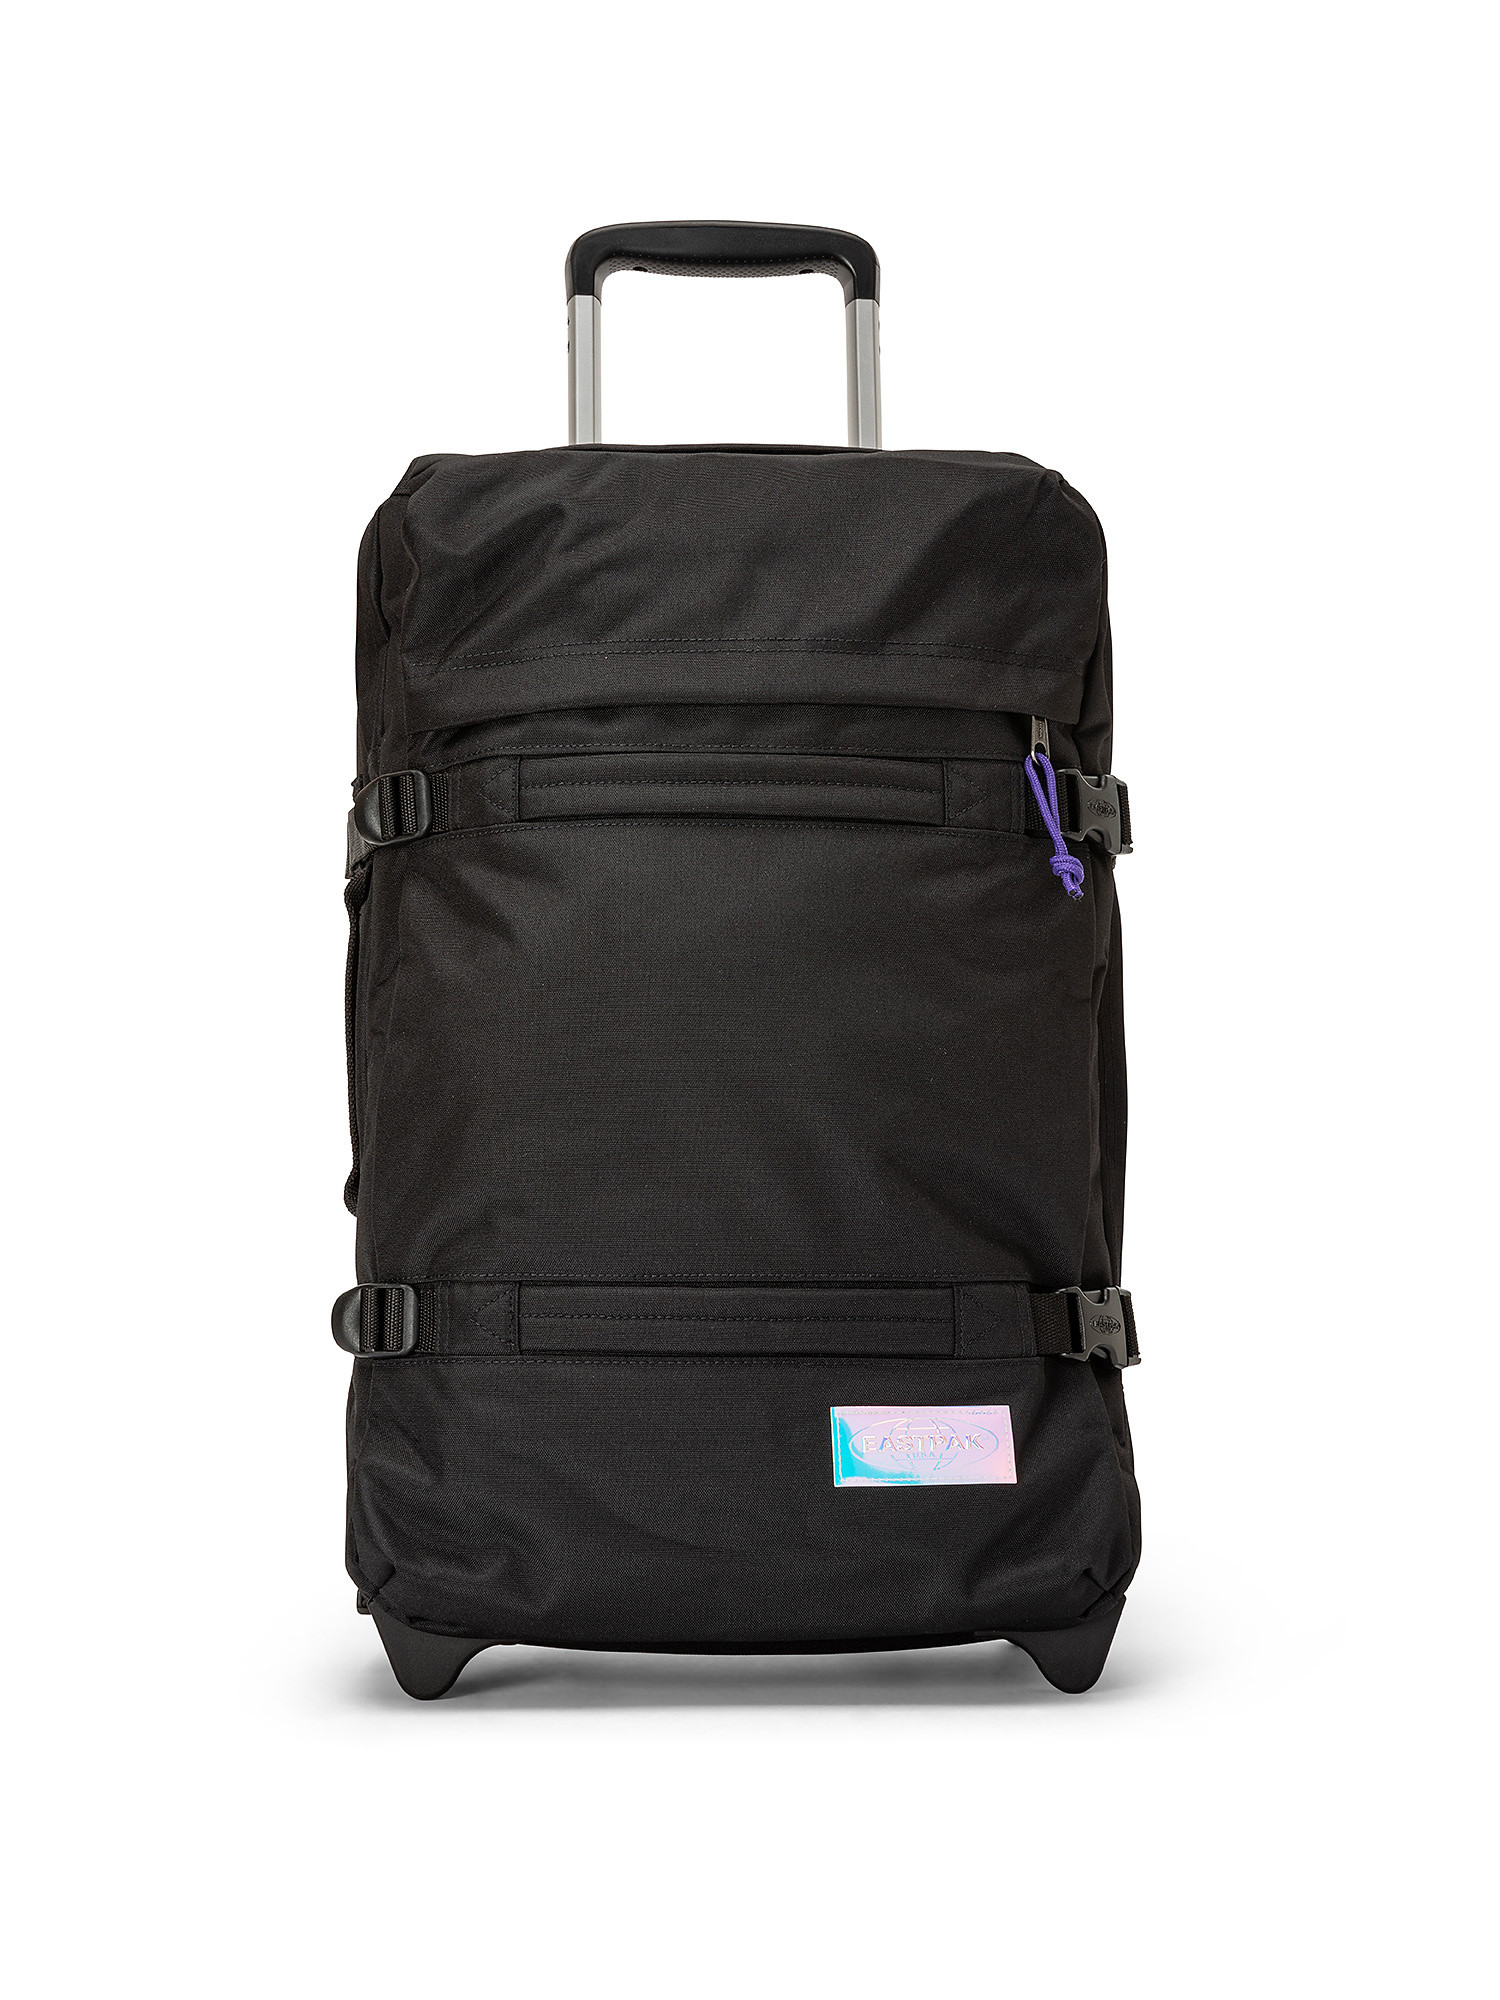 Backpack with pocket for laptop and tablet, Black, large image number 0